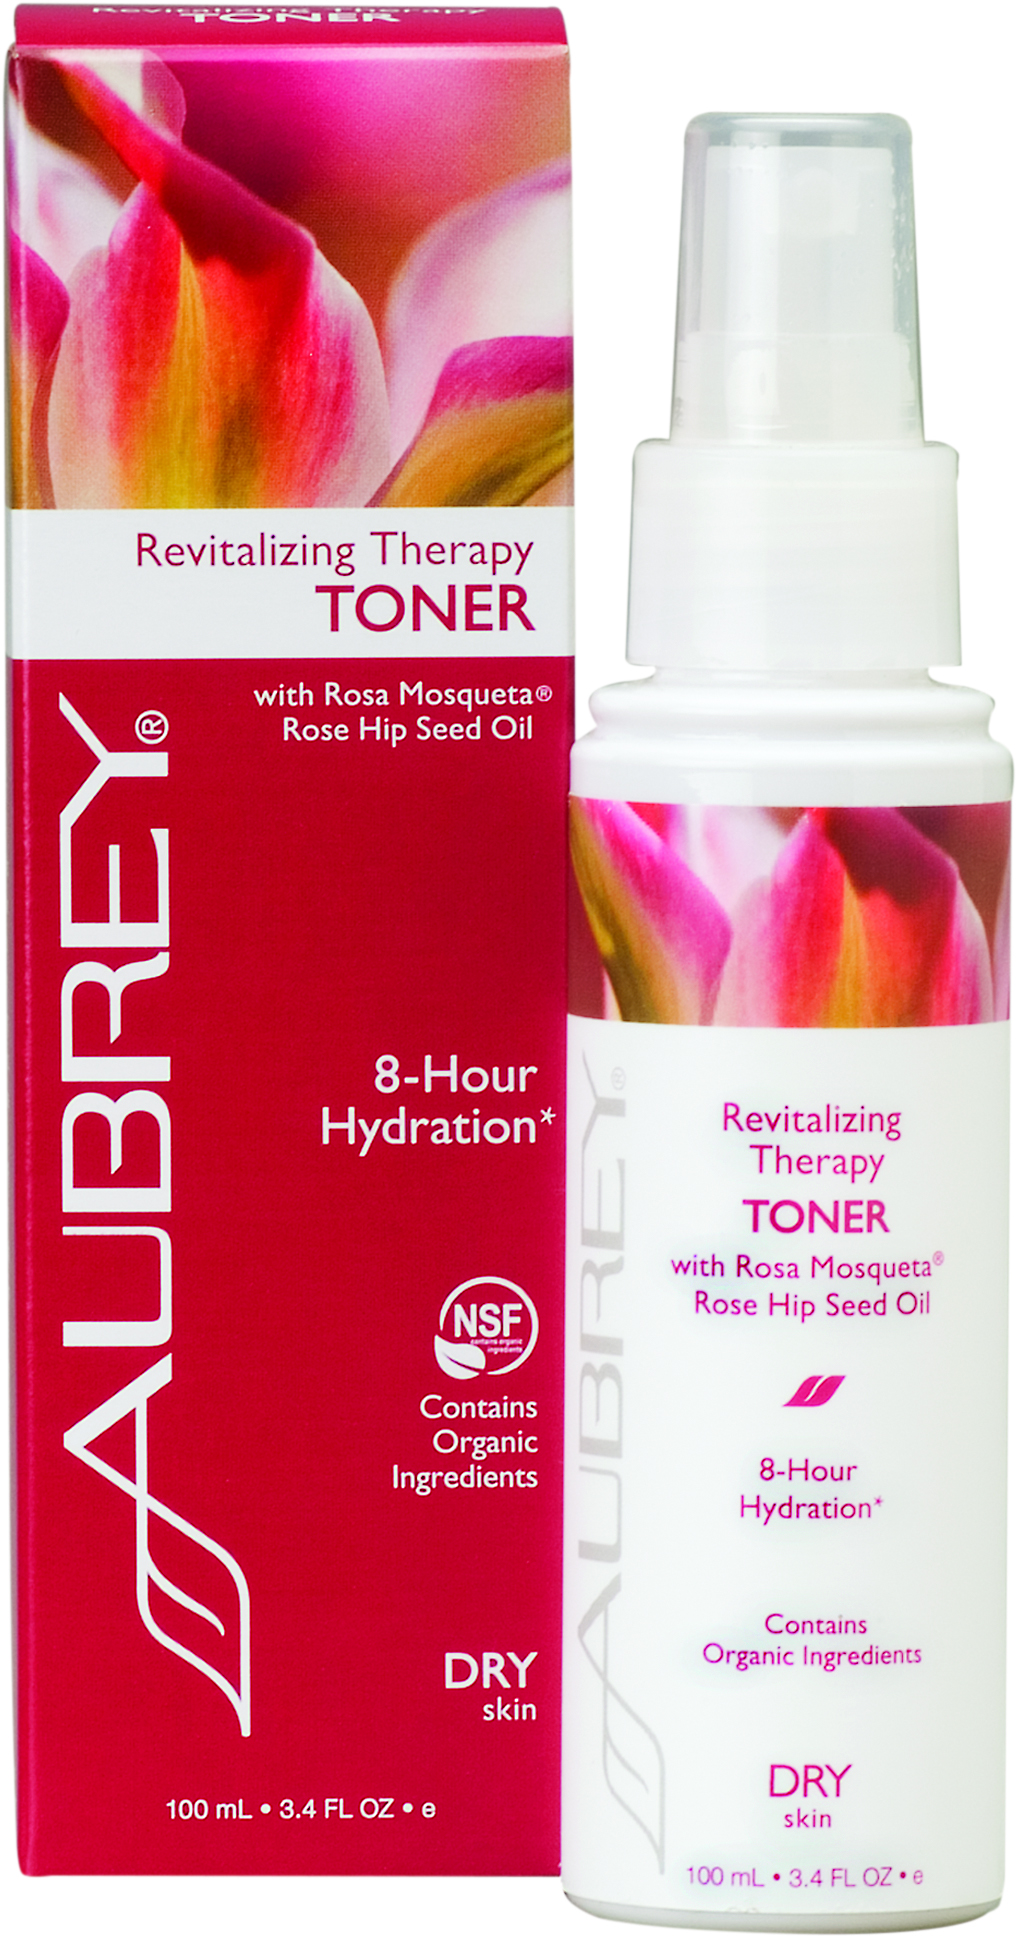 Aubrey Revitalizing Therapy Toner